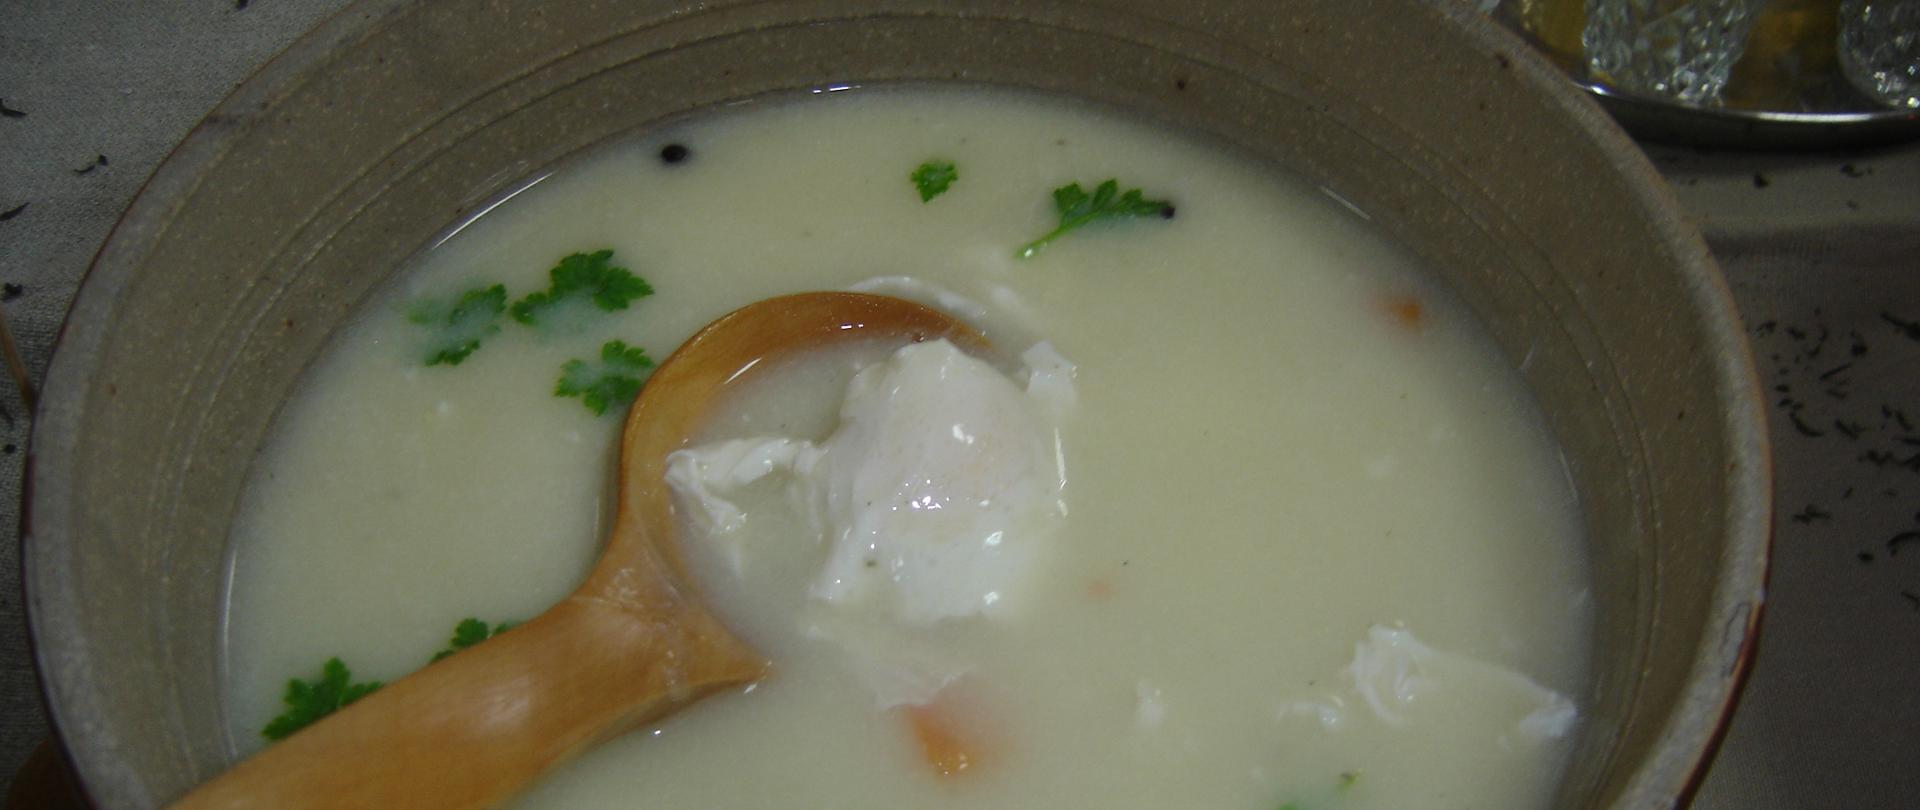 kujawska zupa z jajek